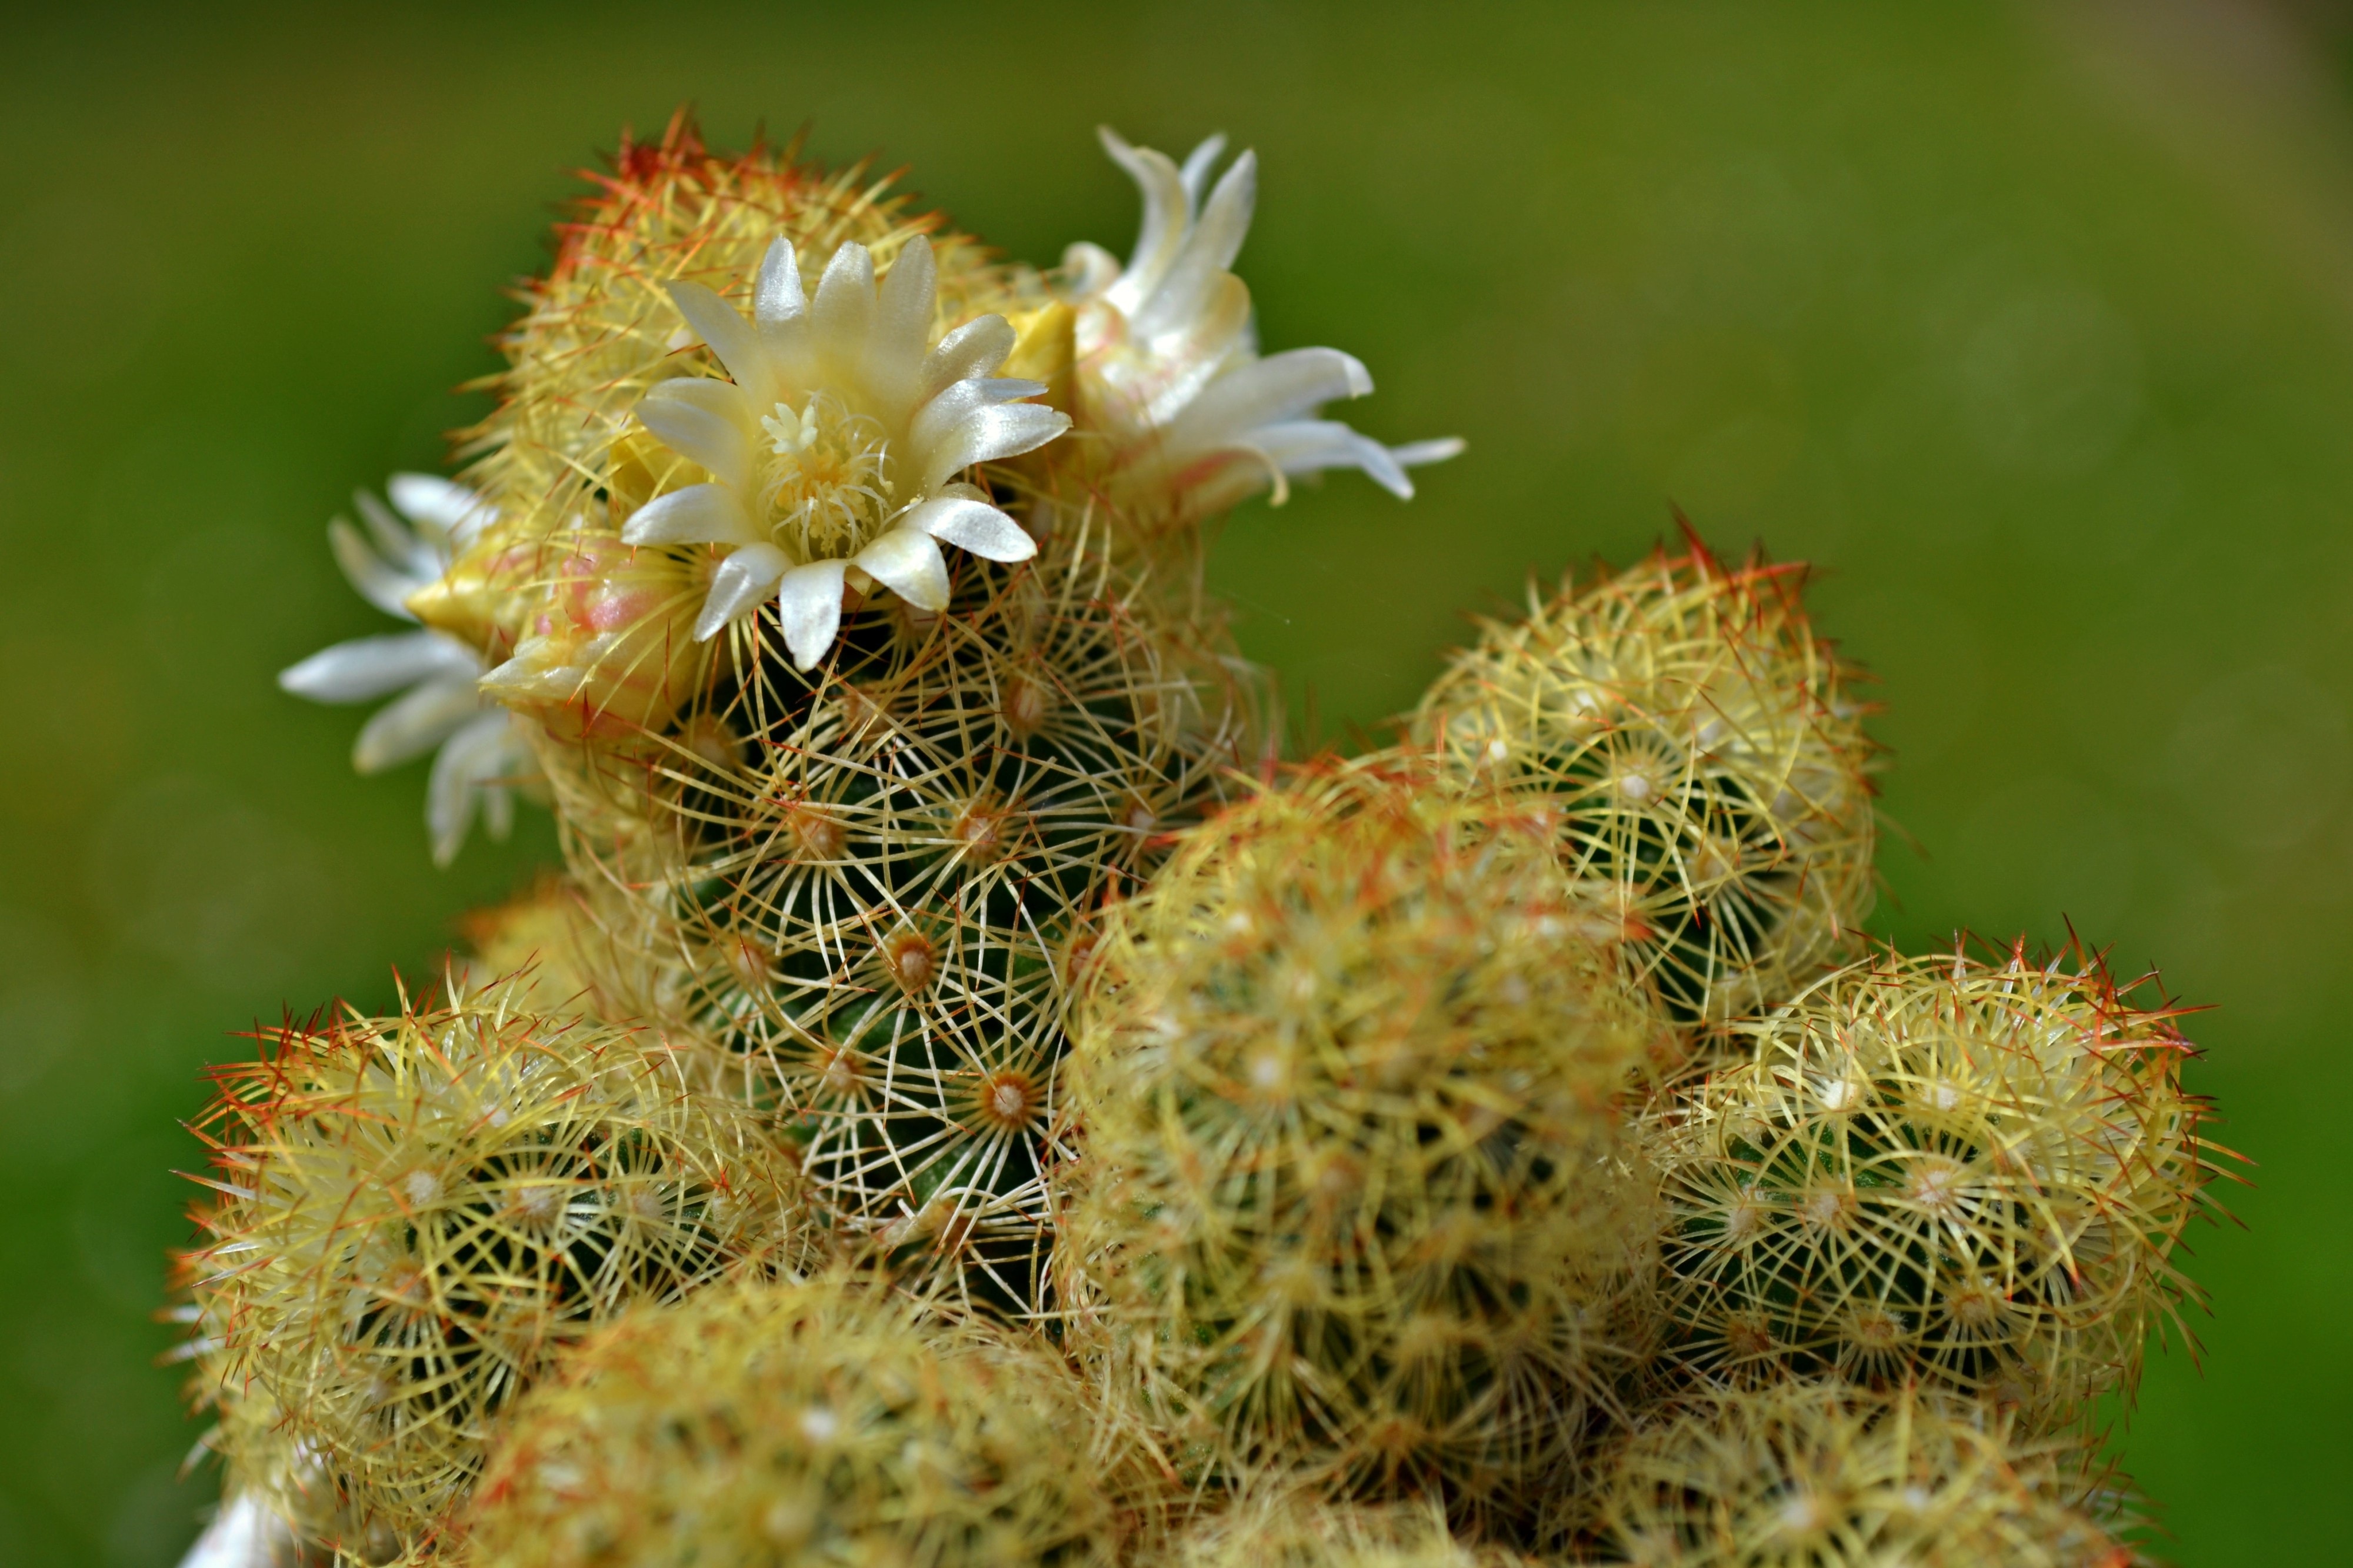 Cactus Flowers, Cactus, White Flowers, thorn, flower